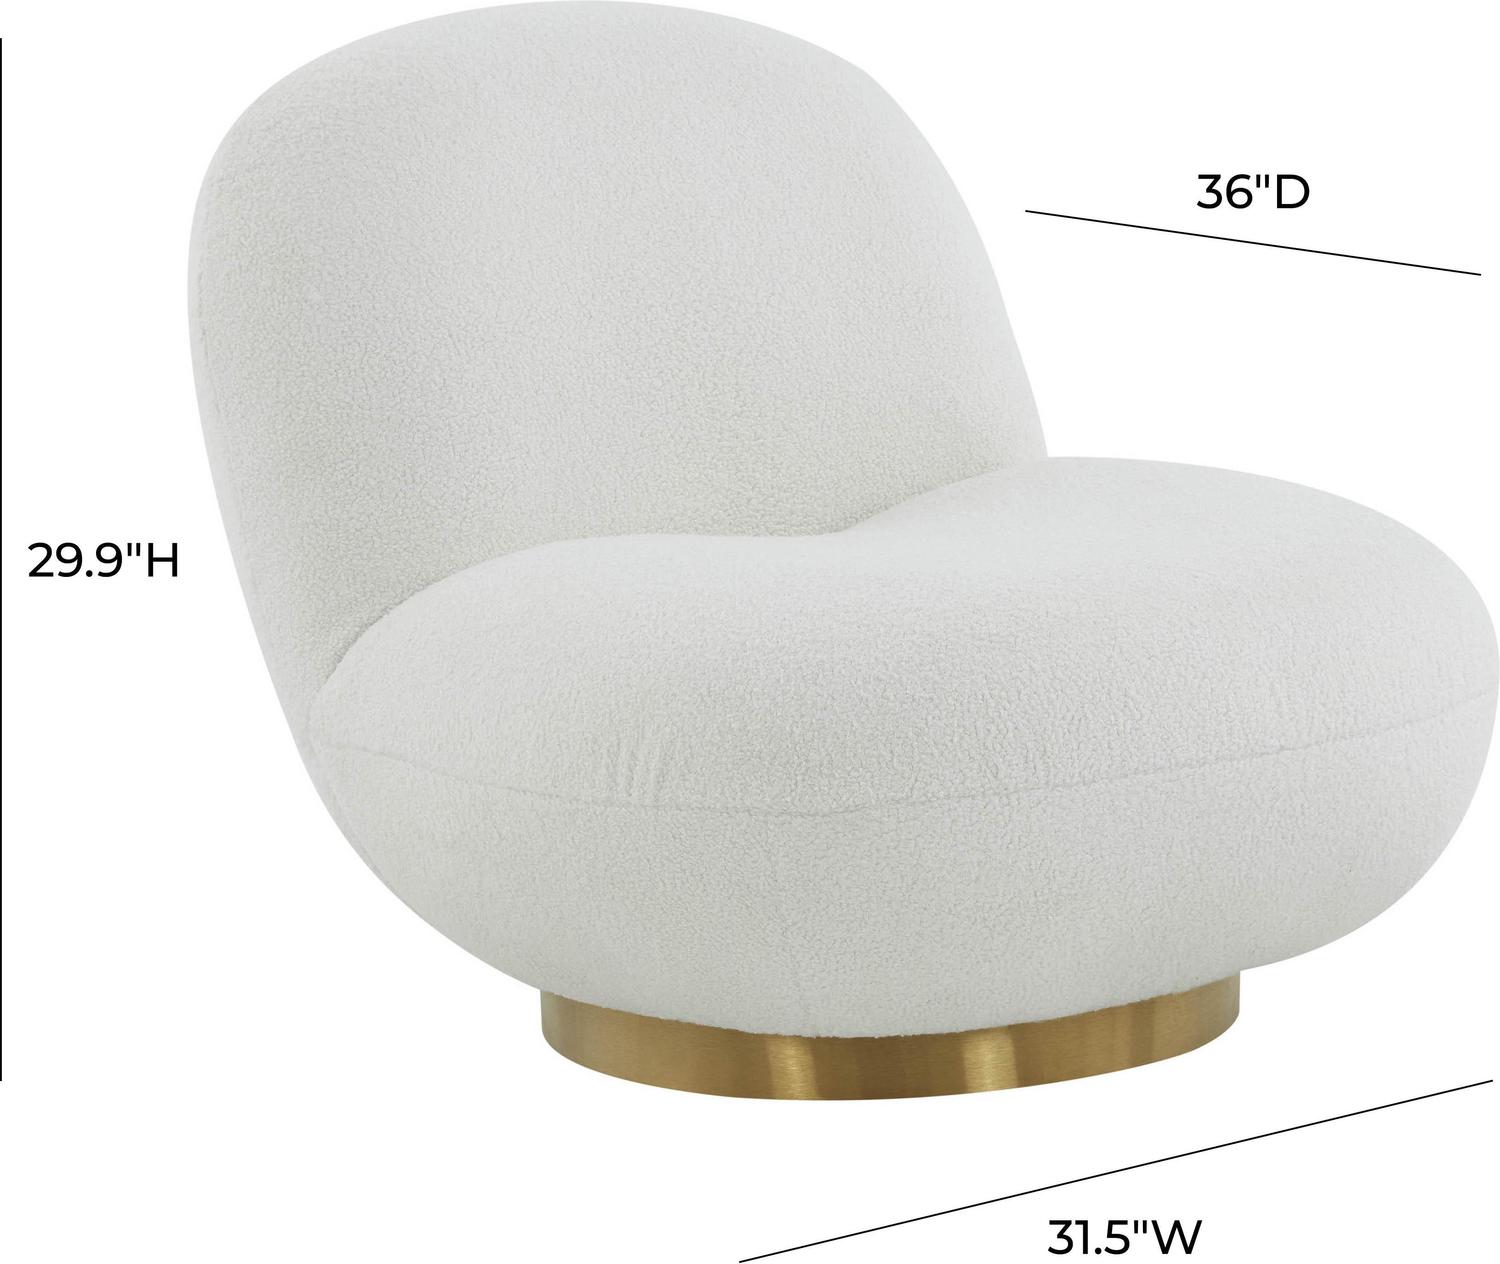 chaise arm chair Tov Furniture Accent Chairs White